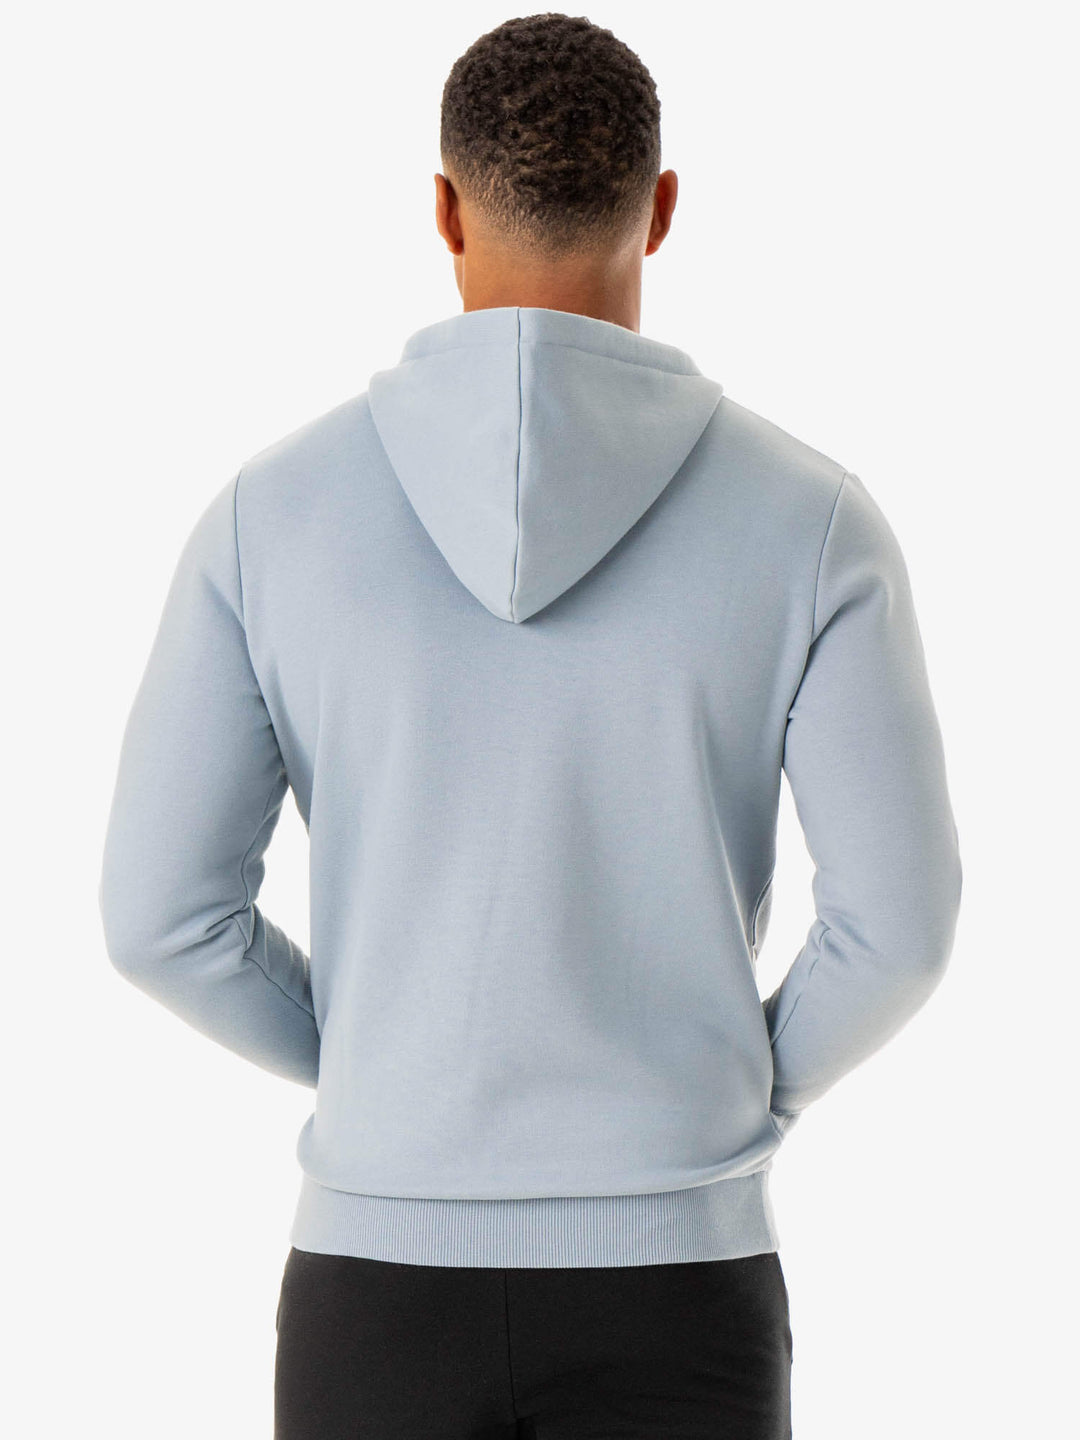 Limitless Zip Up Jacket - Ice Blue Clothing Ryderwear 